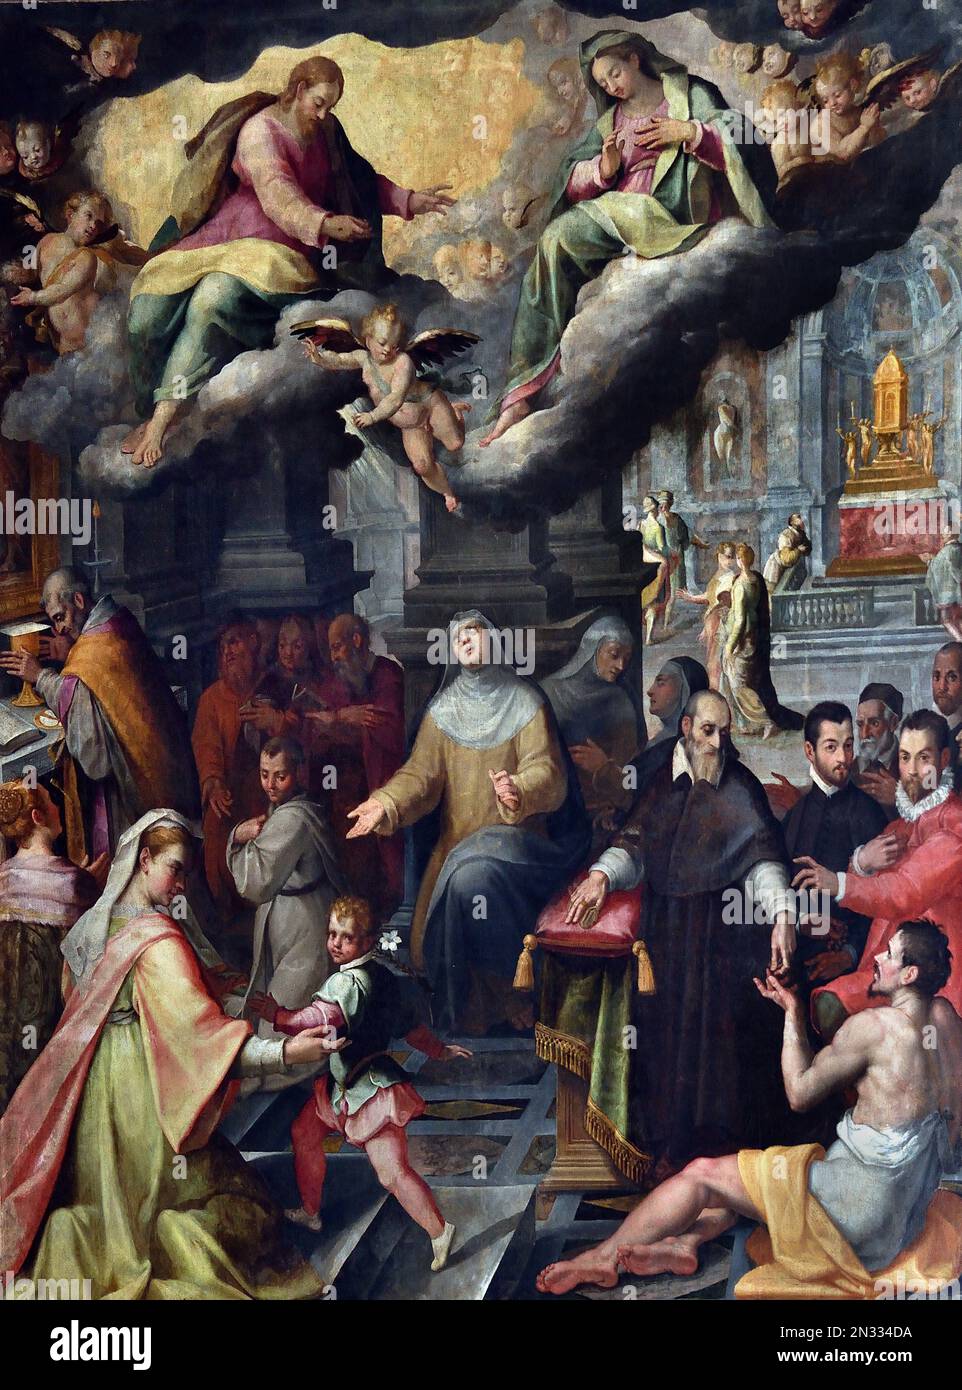 Cristoforo Roncalli, Heilige Katharina empfängt den Eucharisten auf wundersame Weise, 1582 16. Jahrhundert, Tine Art Museum, Italien, Basilika San Domenico, Siena Stockfoto